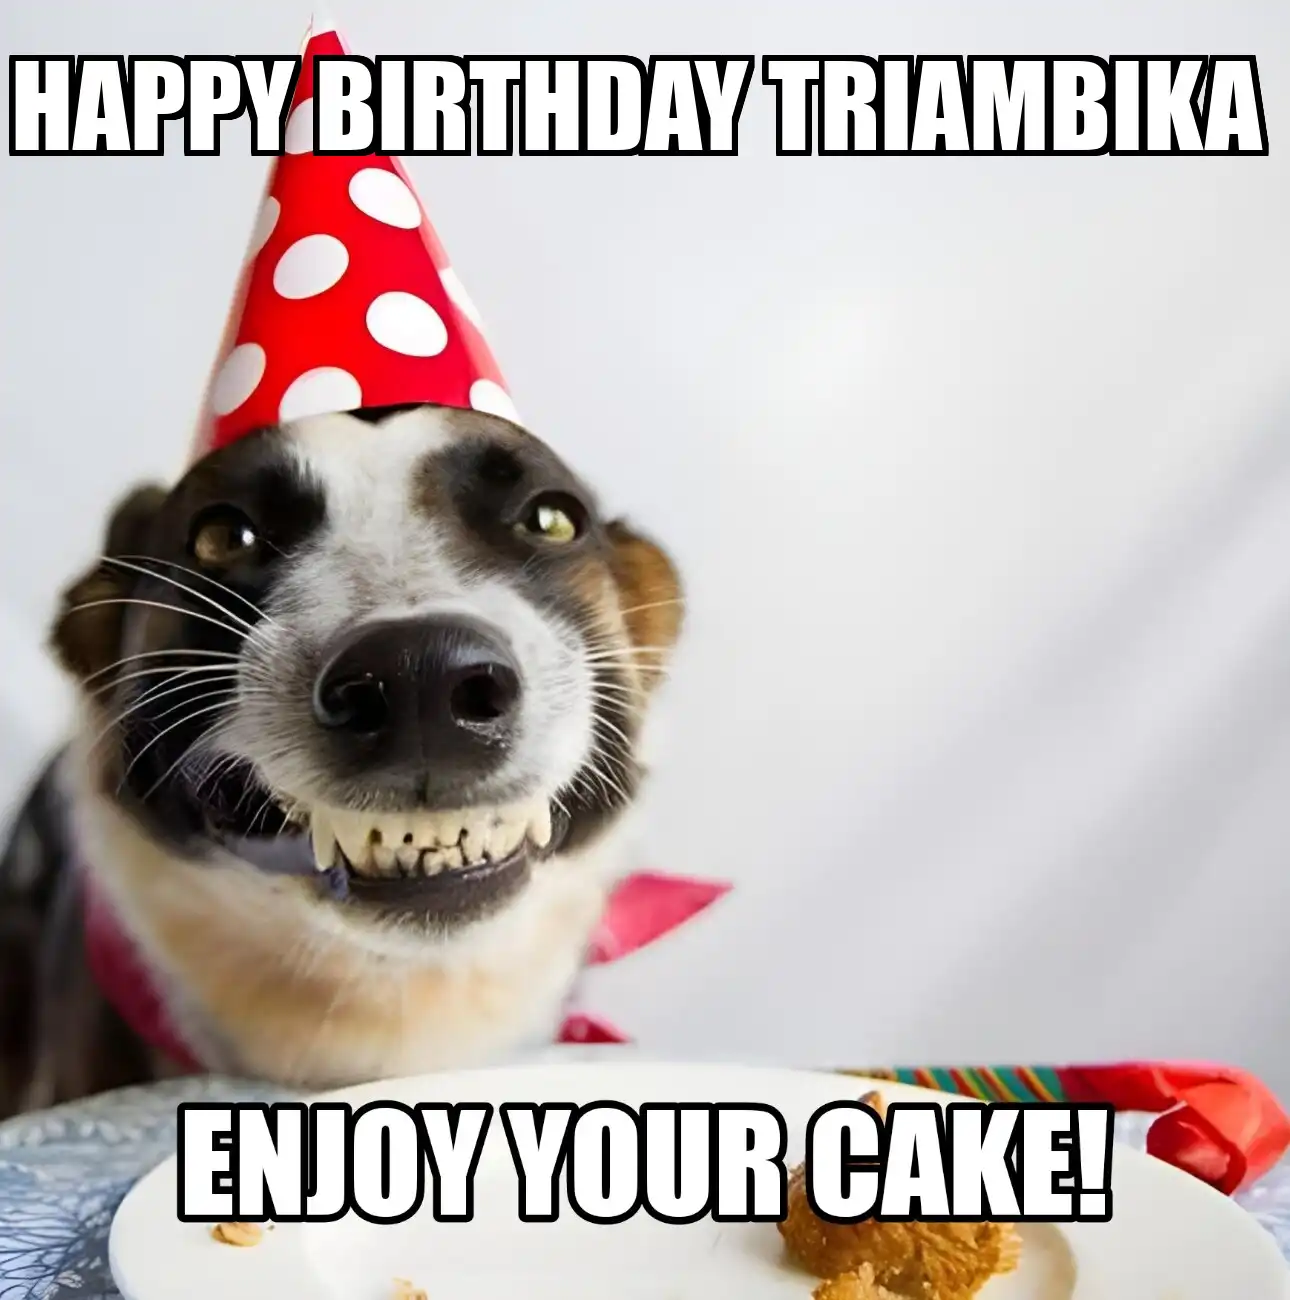 Happy Birthday Triambika Enjoy Your Cake Dog Meme